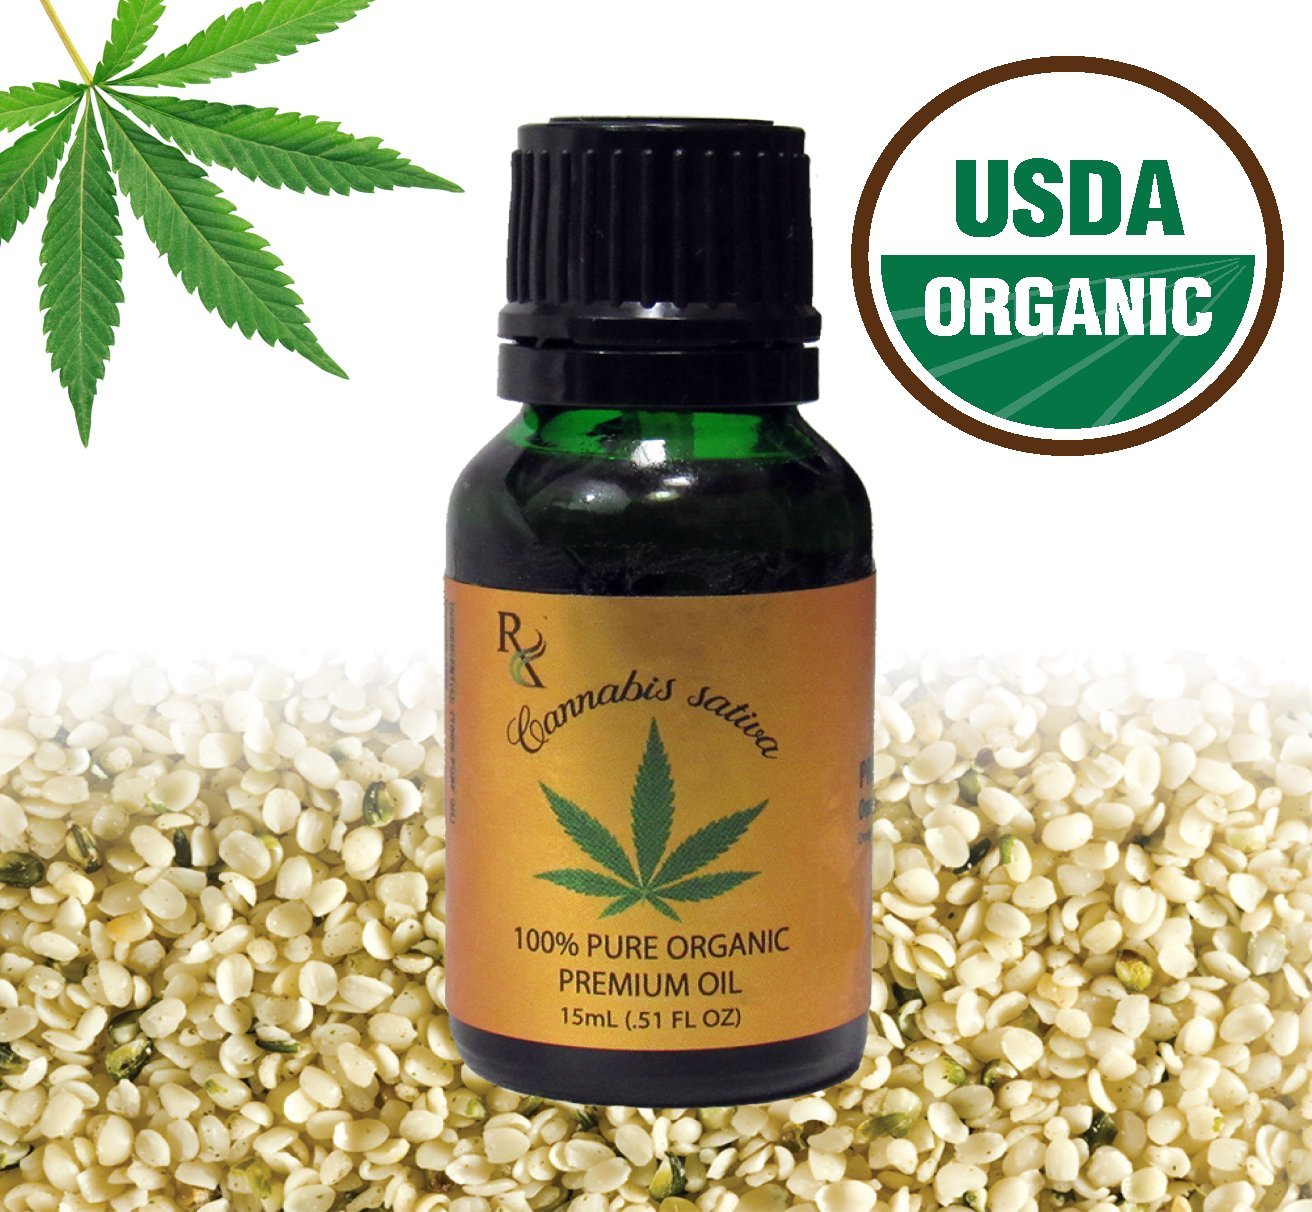 cannabis sativa seed oil benefits